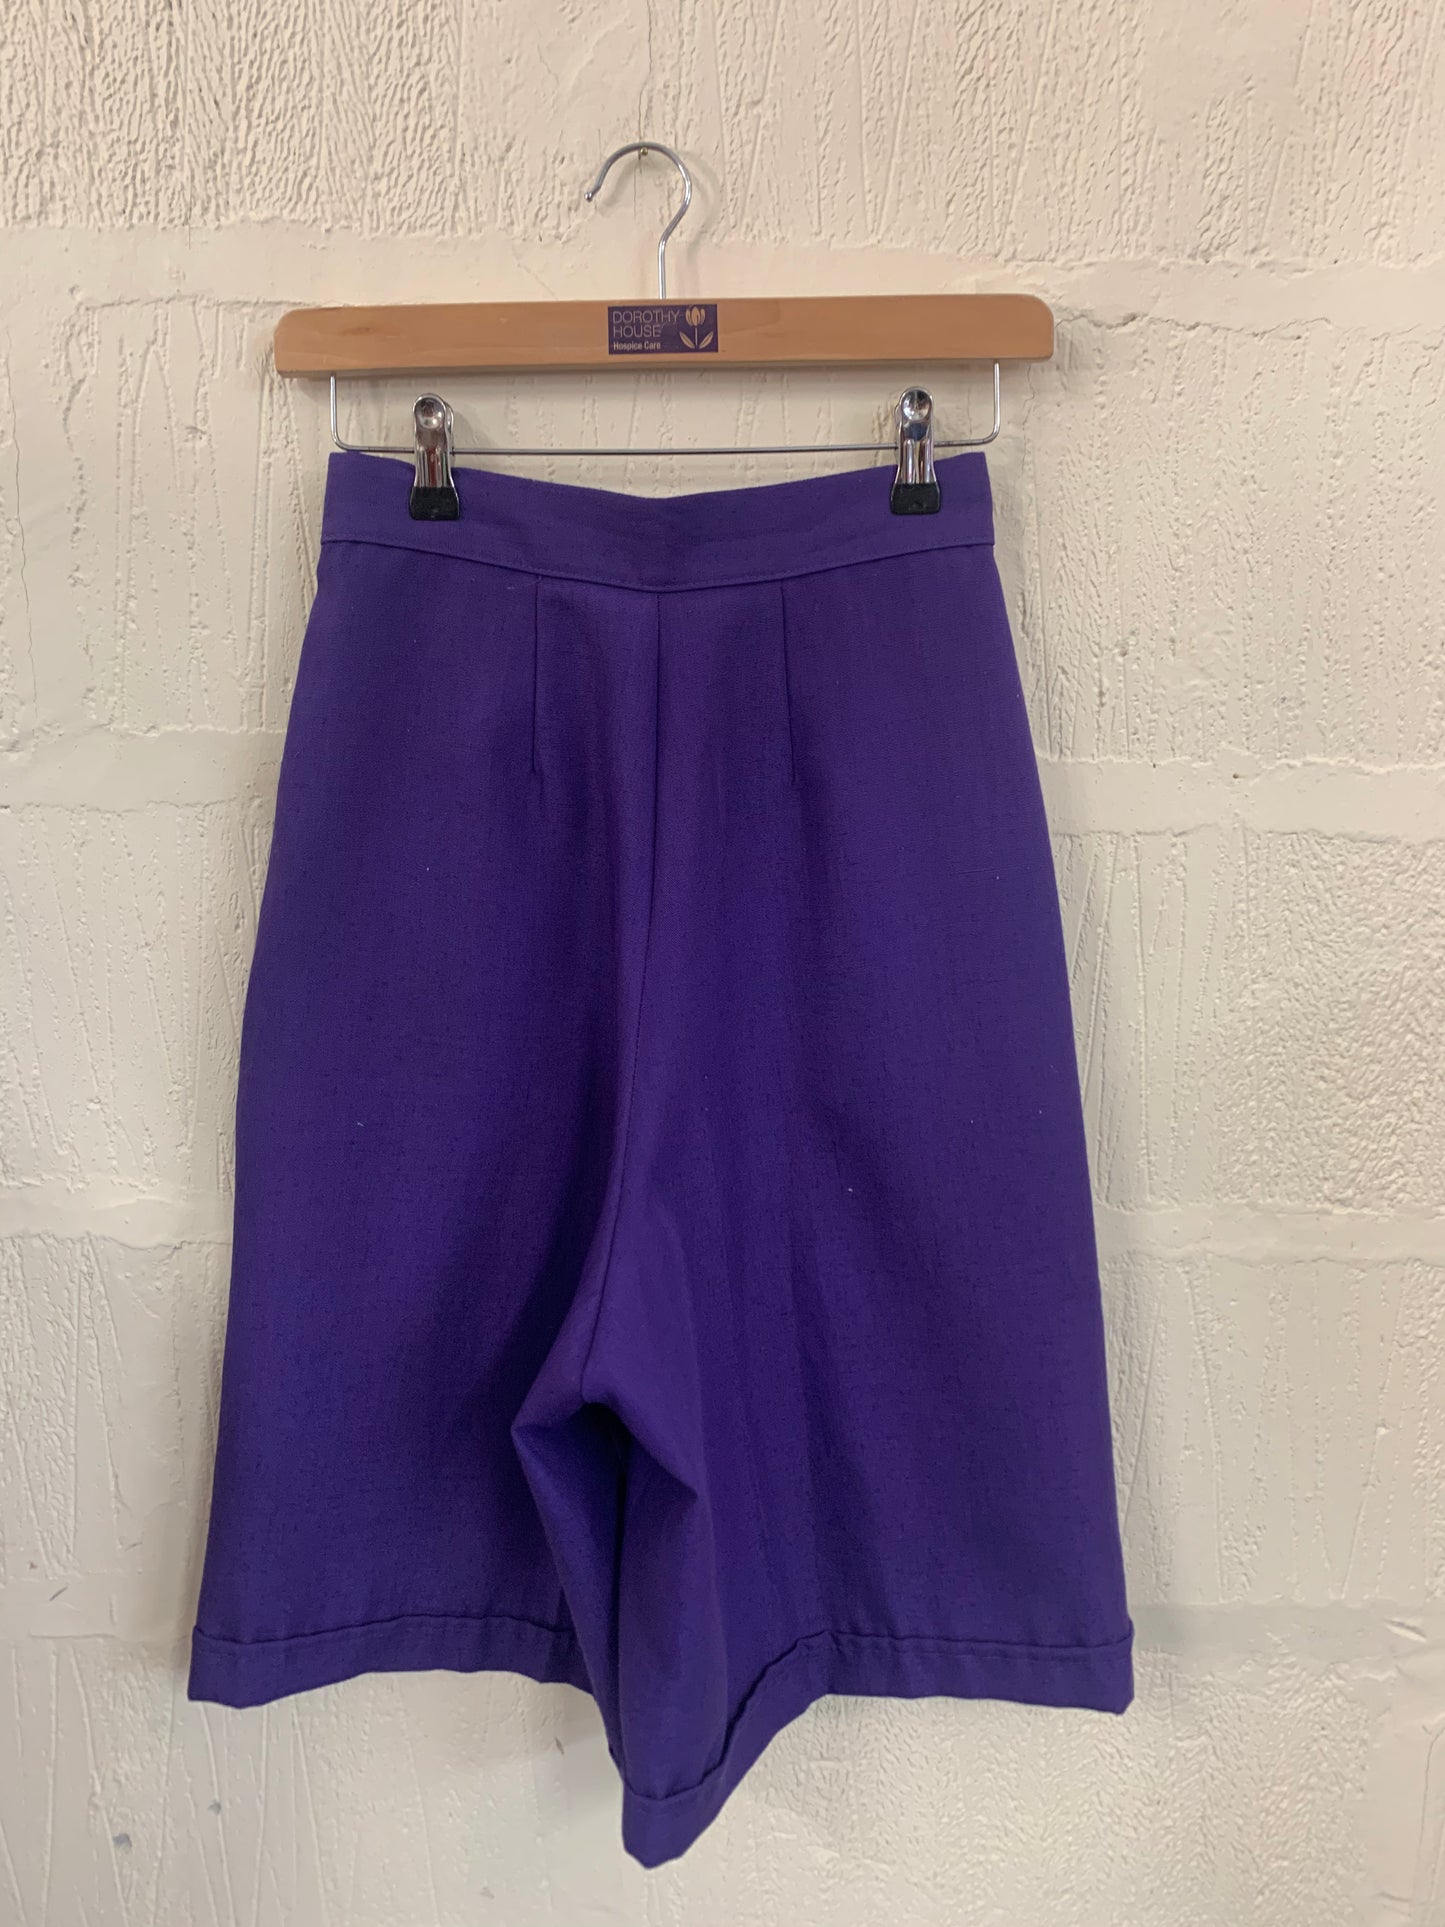 Vintage 1980s Style St Michael Purple Tailored Shorts Size 6